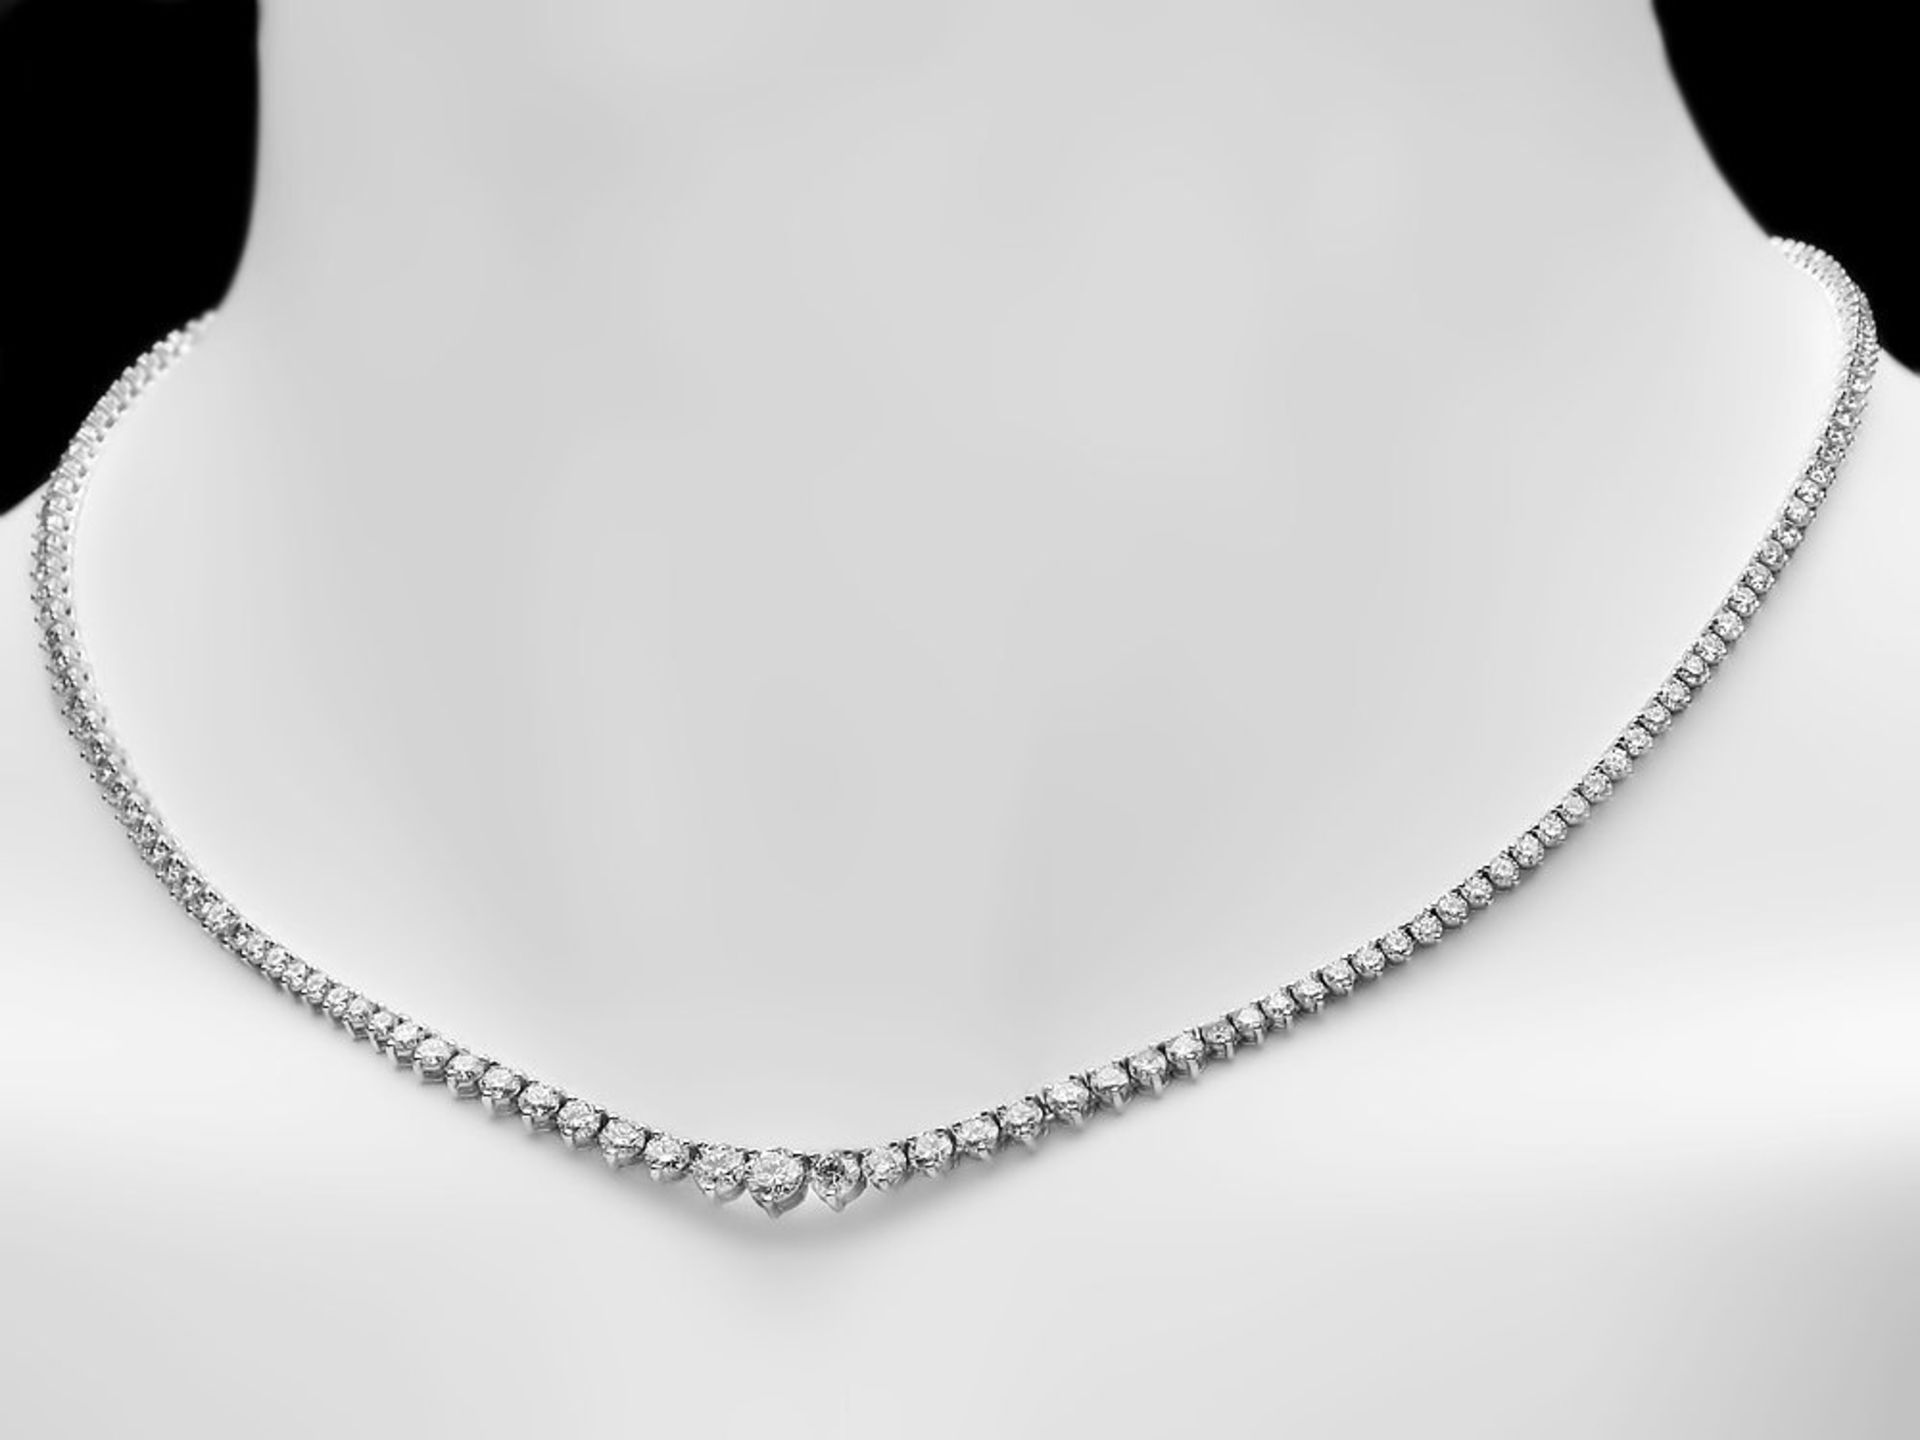 18k White Gold 9.00ct Diamond Necklace - Image 2 of 5